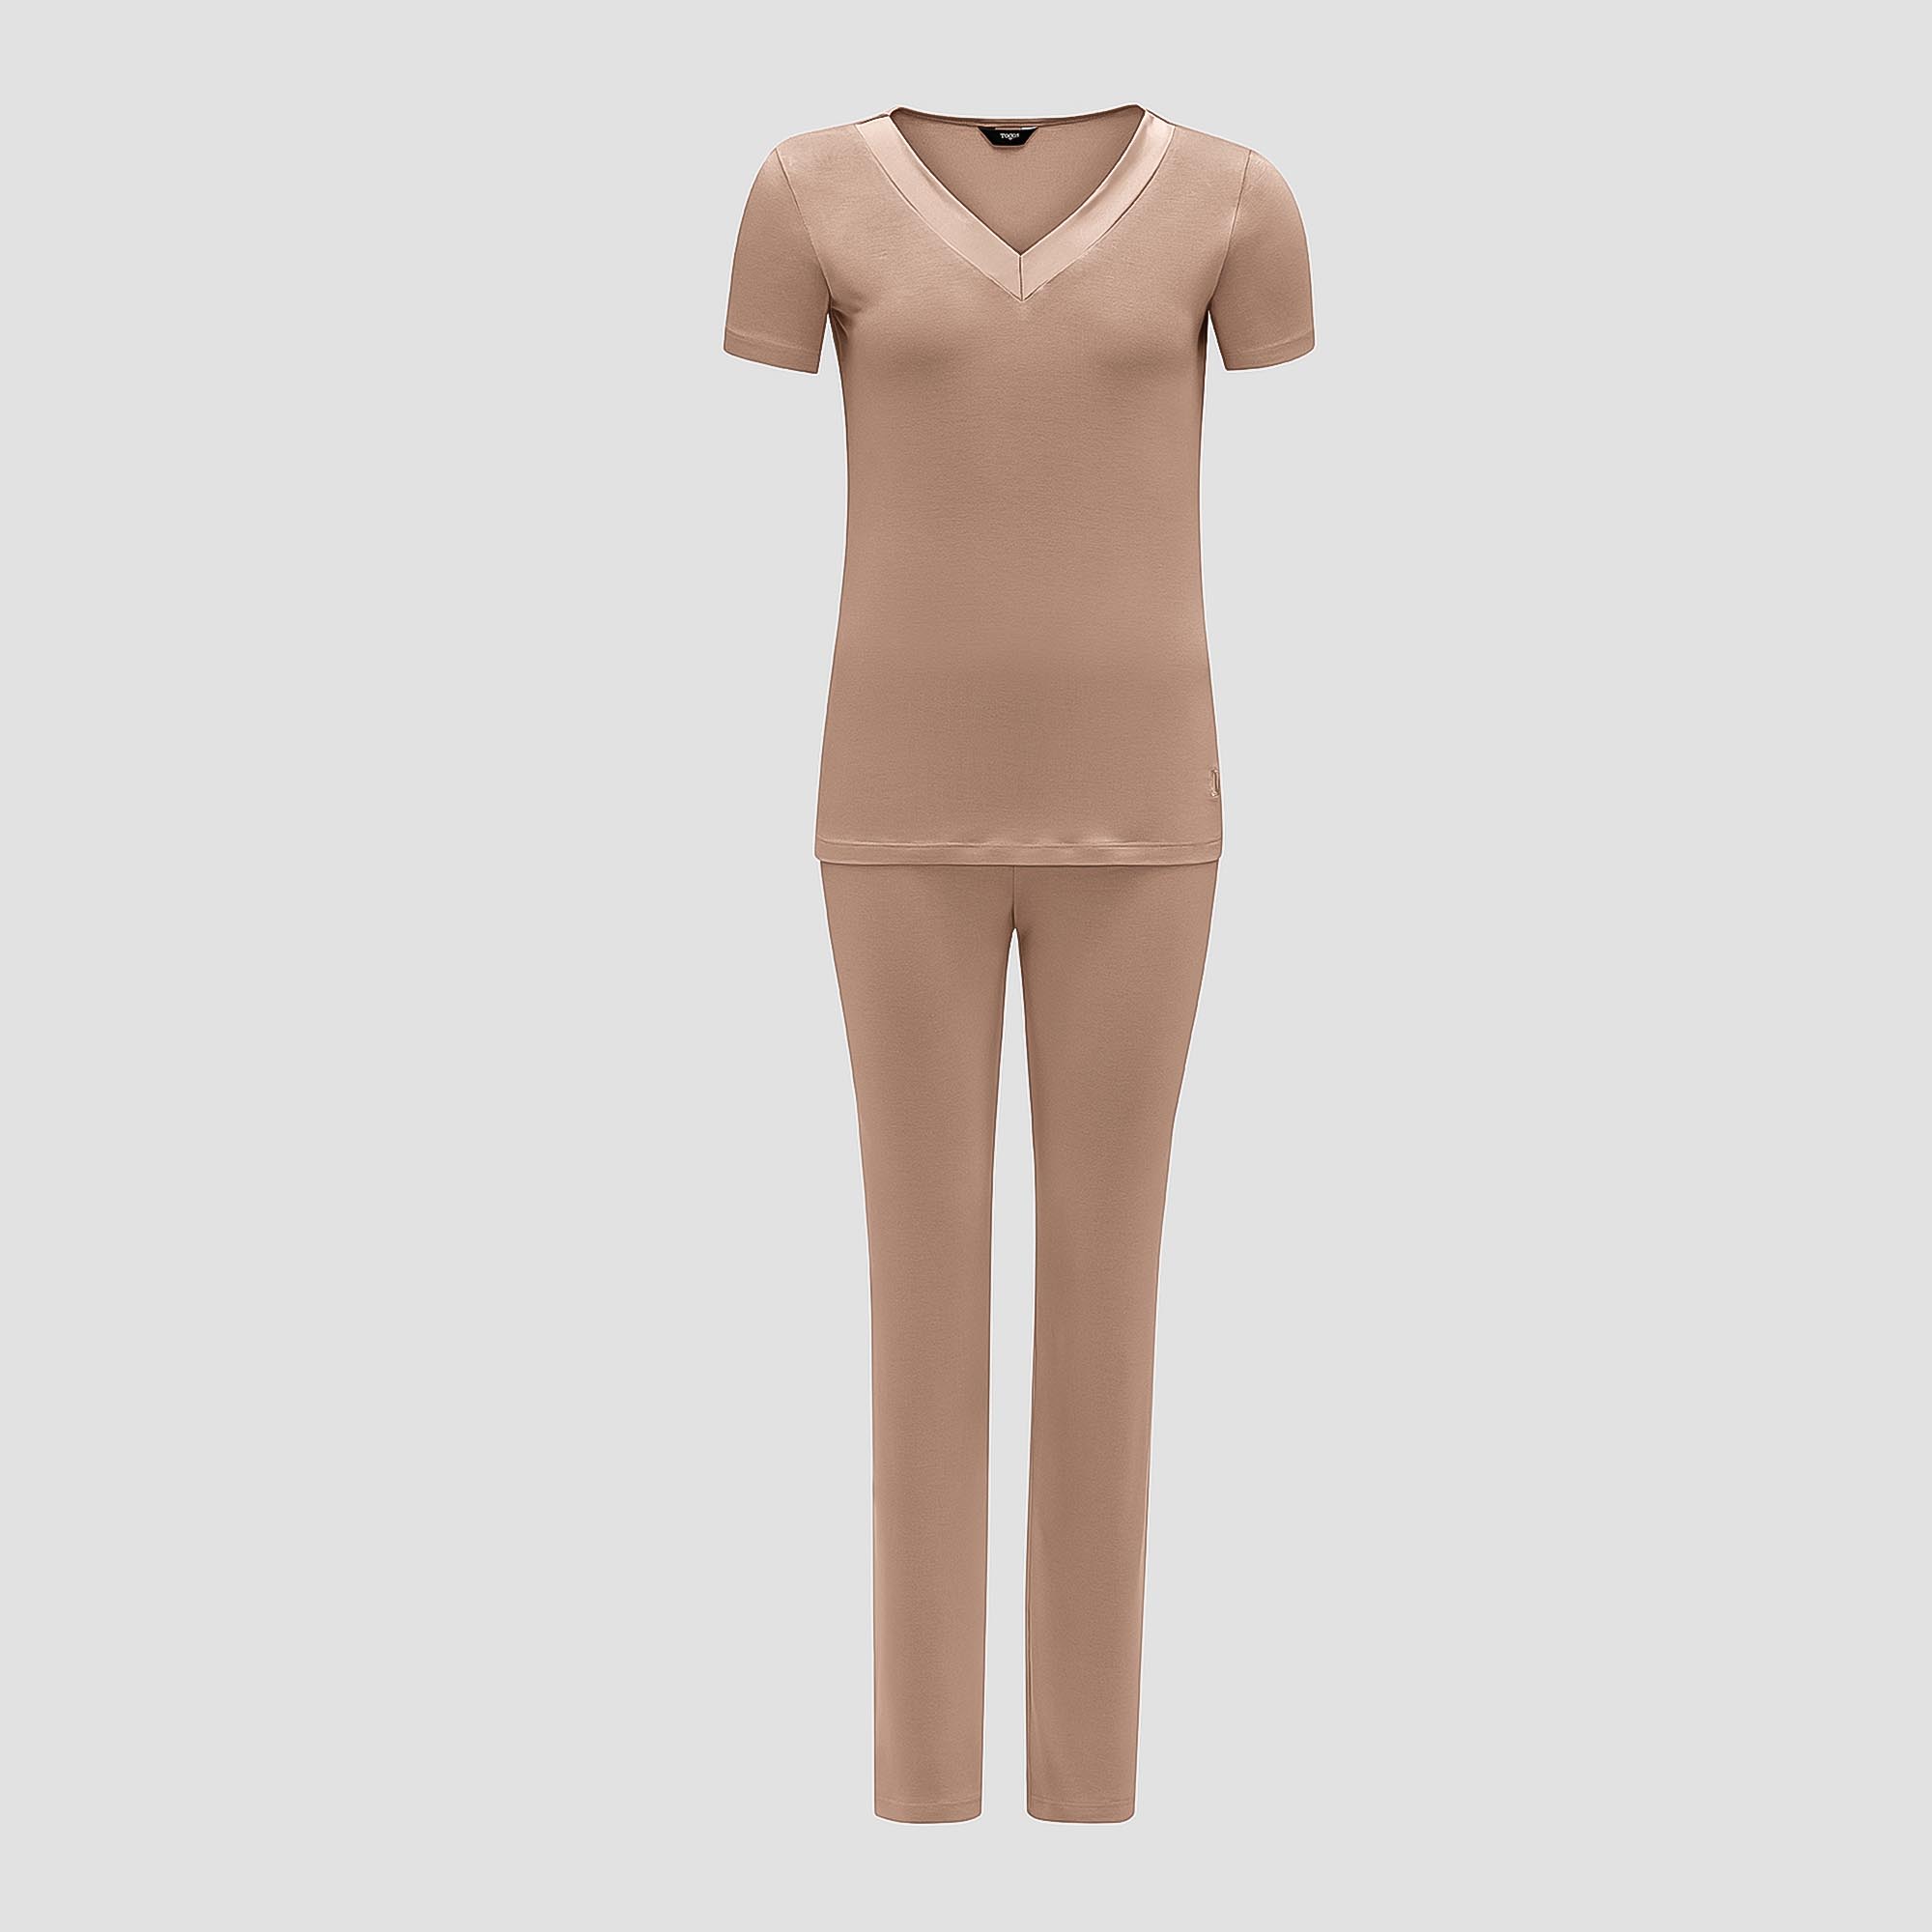 Пижама Togas Ингелла розово-бежевая женская XL(50) 2 предмета муж пижама виктор синий р 52